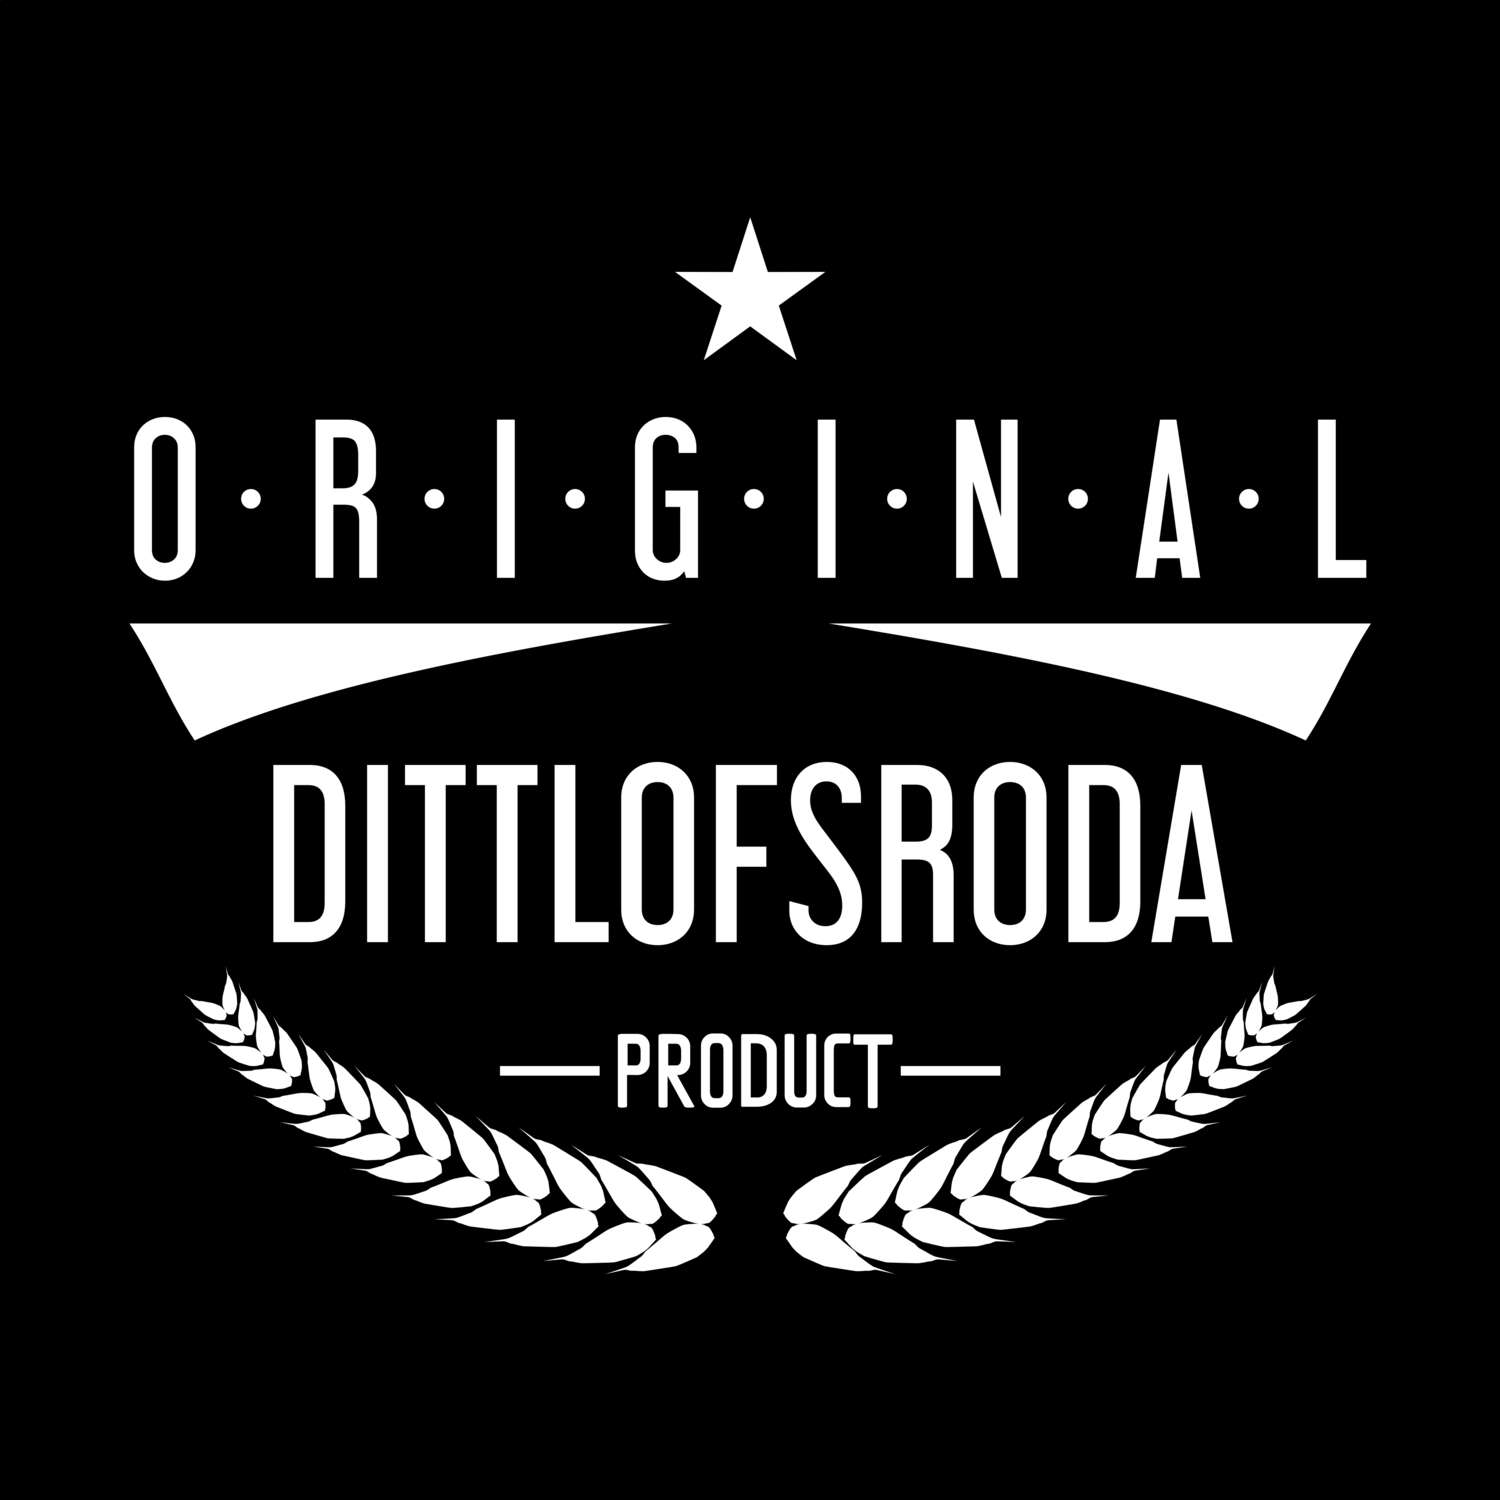 Dittlofsroda T-Shirt »Original Product«